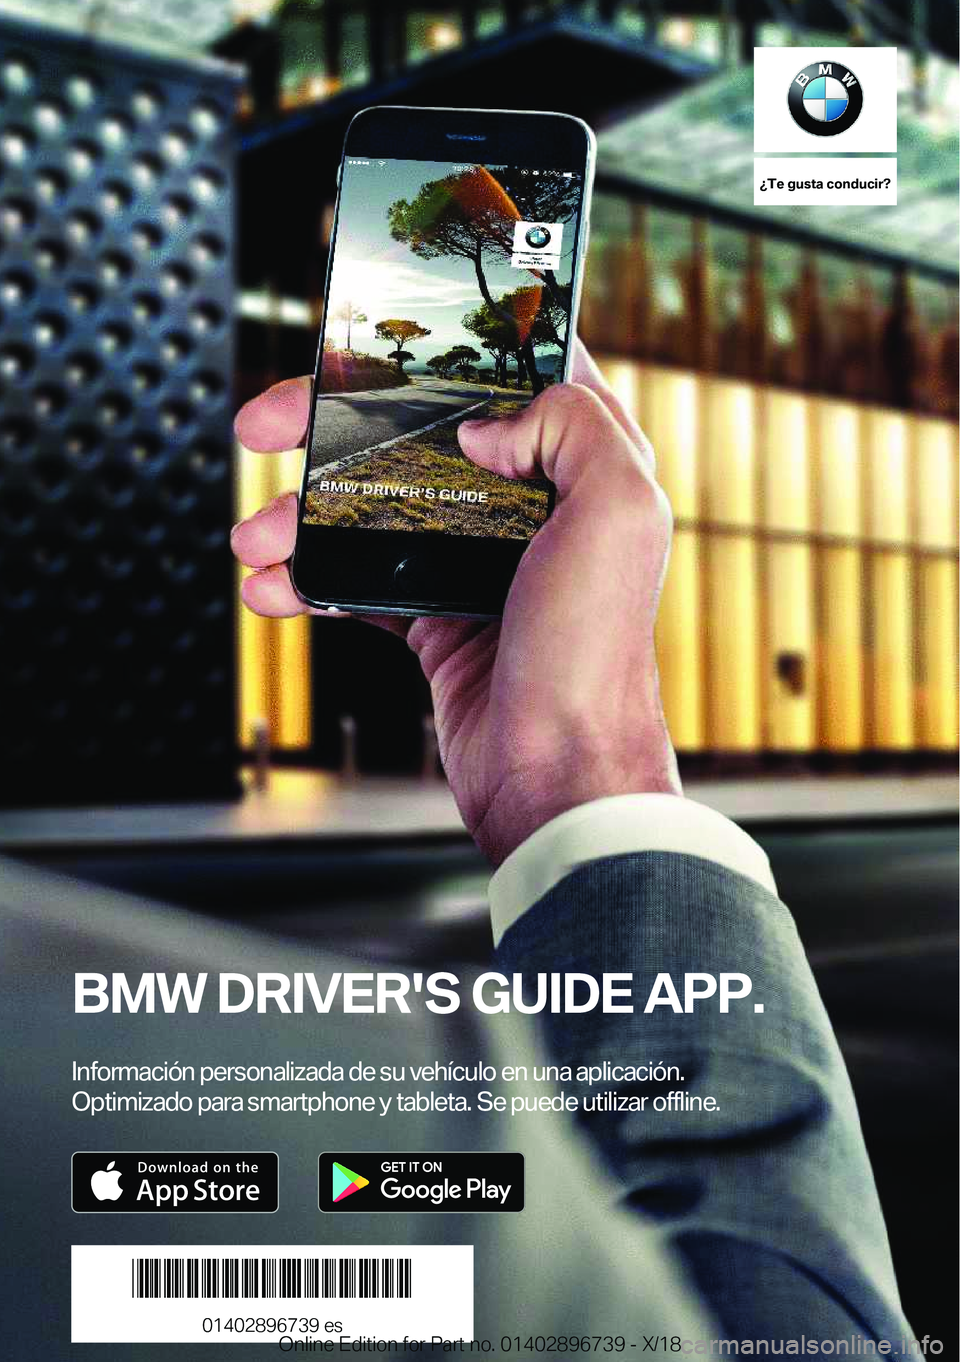 BMW X5 2019  Manuales de Empleo (in Spanish) ��T�e��g�u�s�t�a��c�o�n�d�u�c�i�r� 
�B�M�W��D�R�I�V�E�R�'�S��G�U�I�D�E��A�P�P�.�*�n�f�o�r�m�a�c�i�